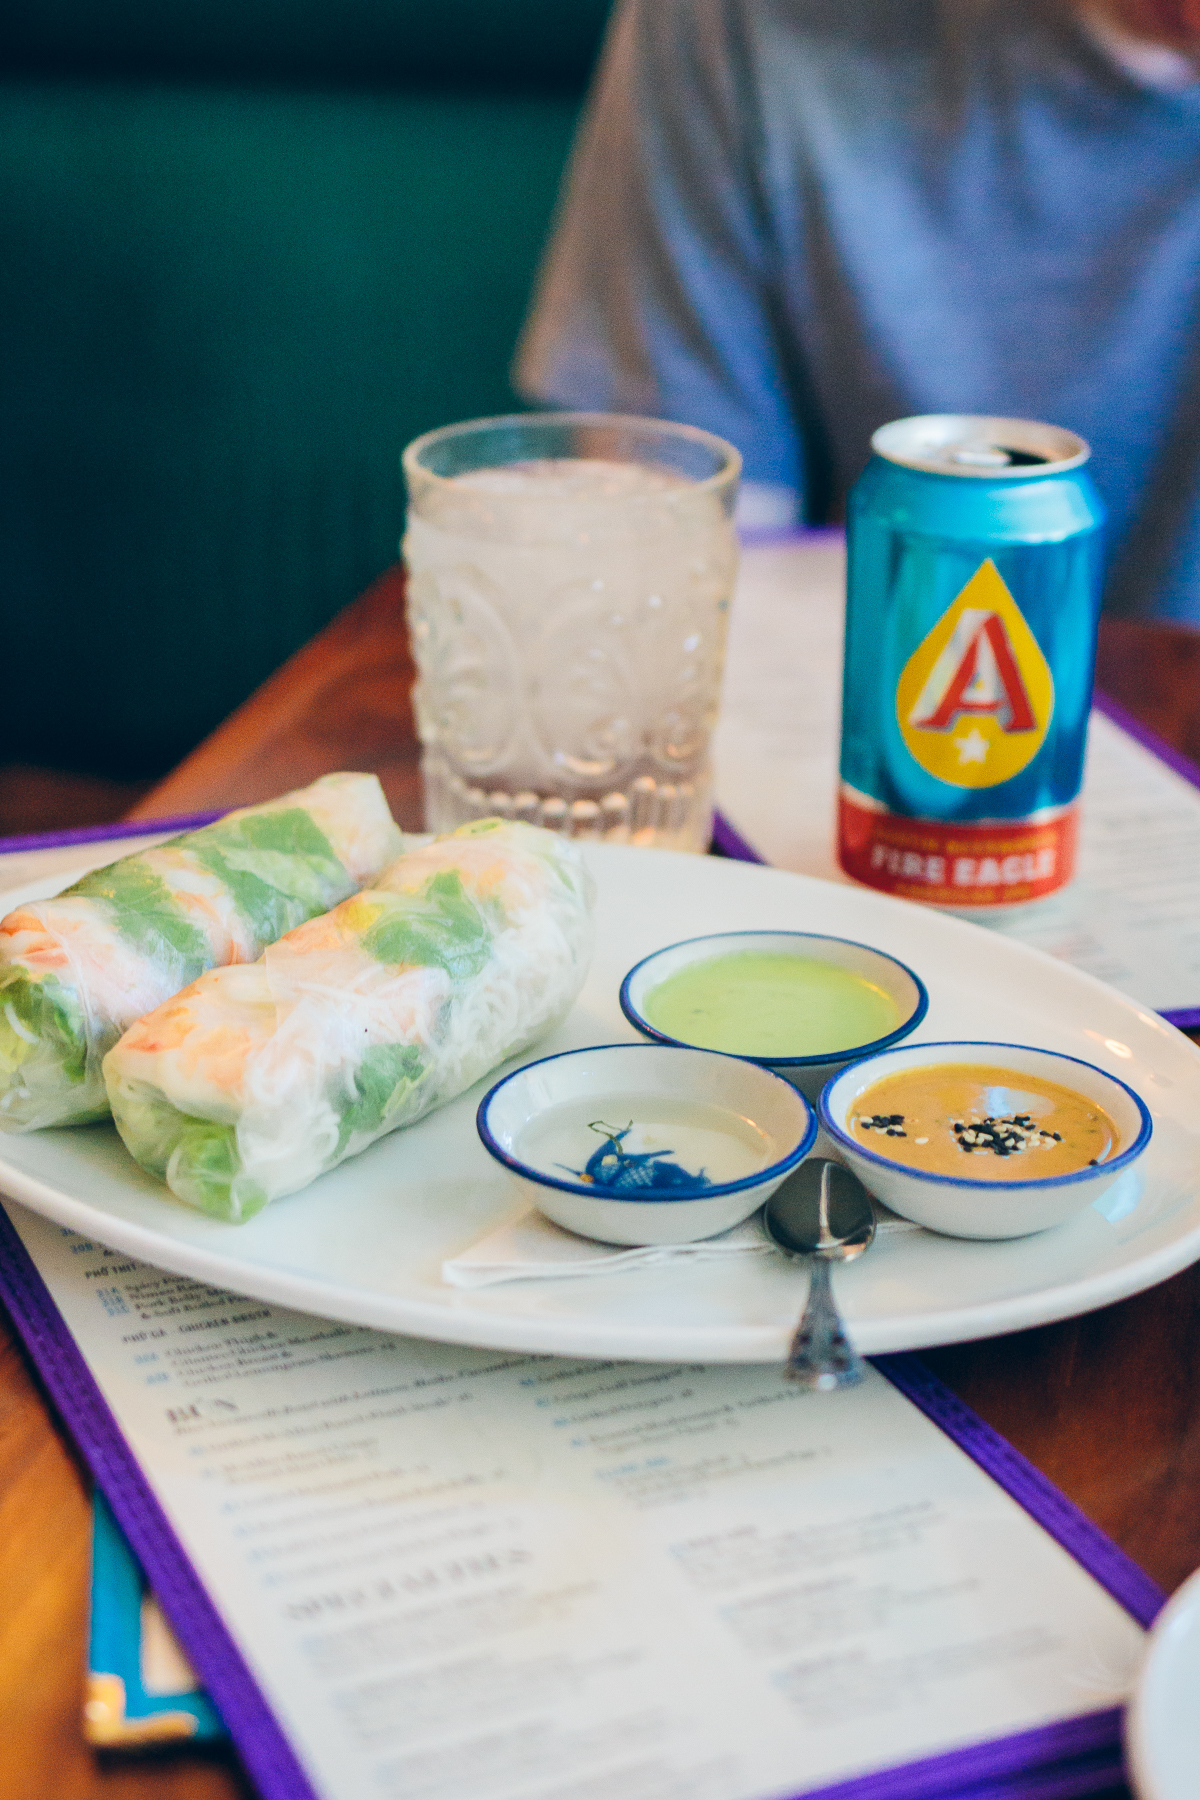 shrimp spring rolls, elizabeth street cafe, vietnamese food, austin texas — via @TheFoxandShe